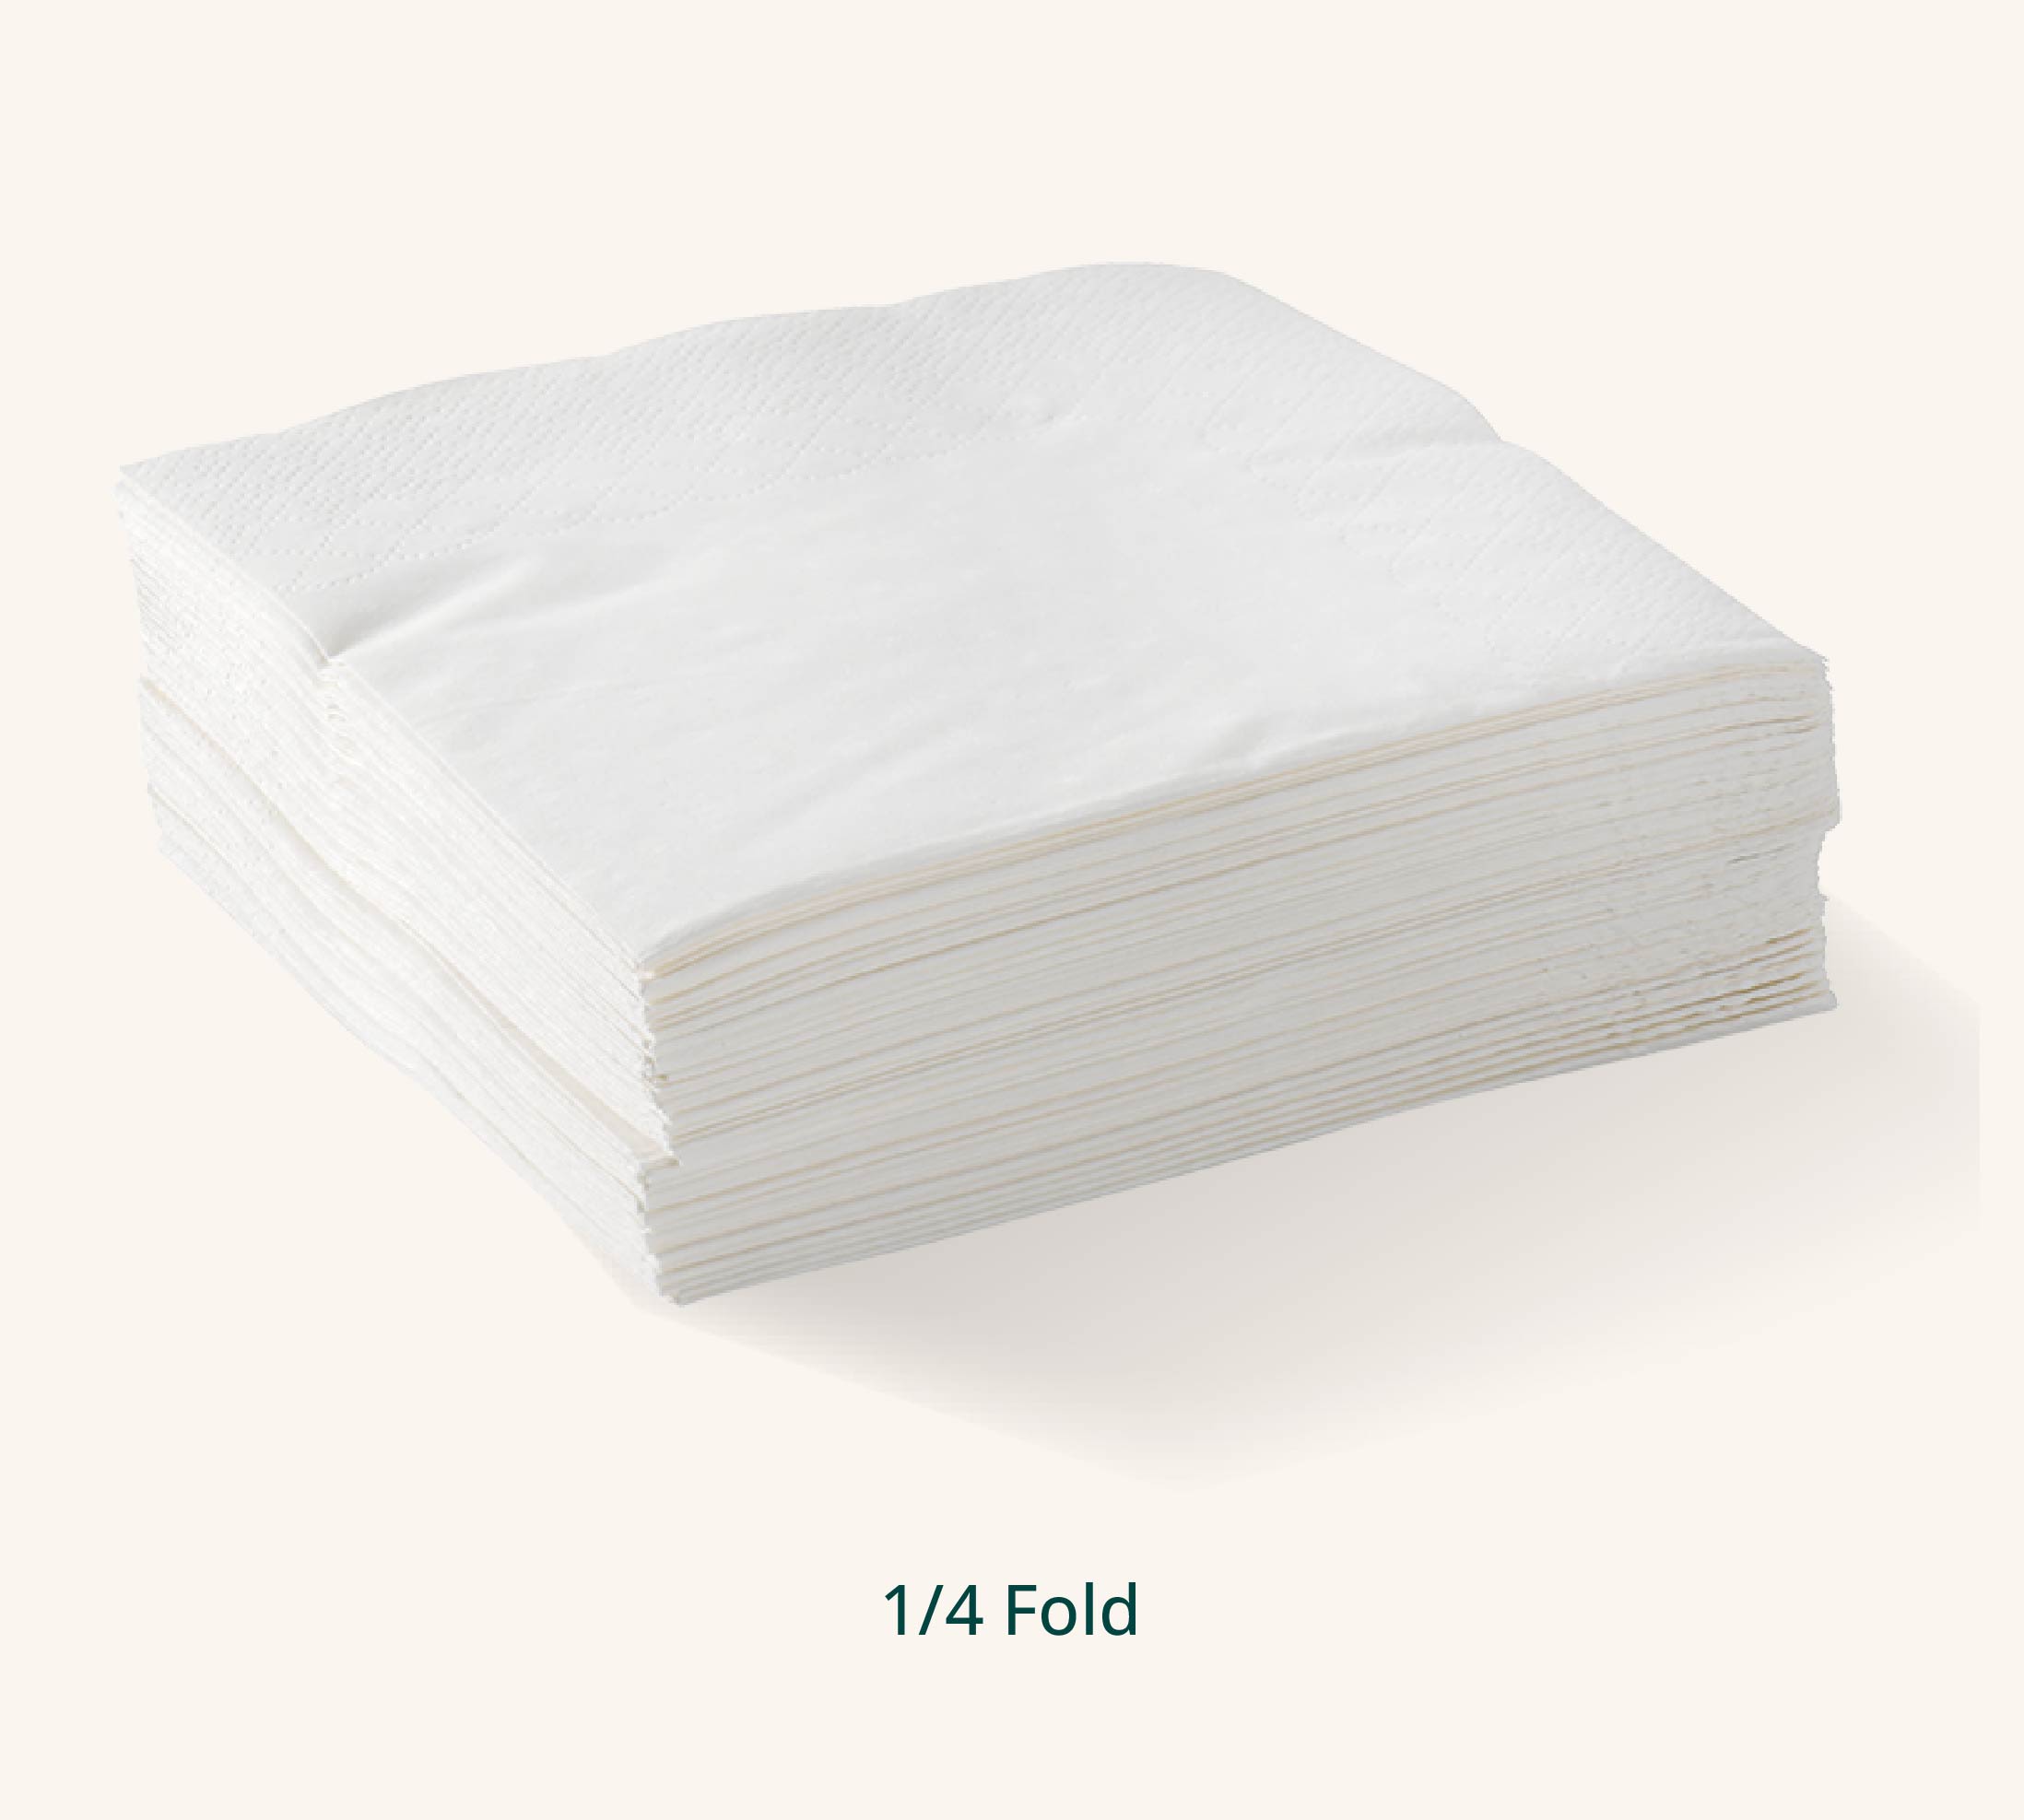 1/4 fold paper napkins